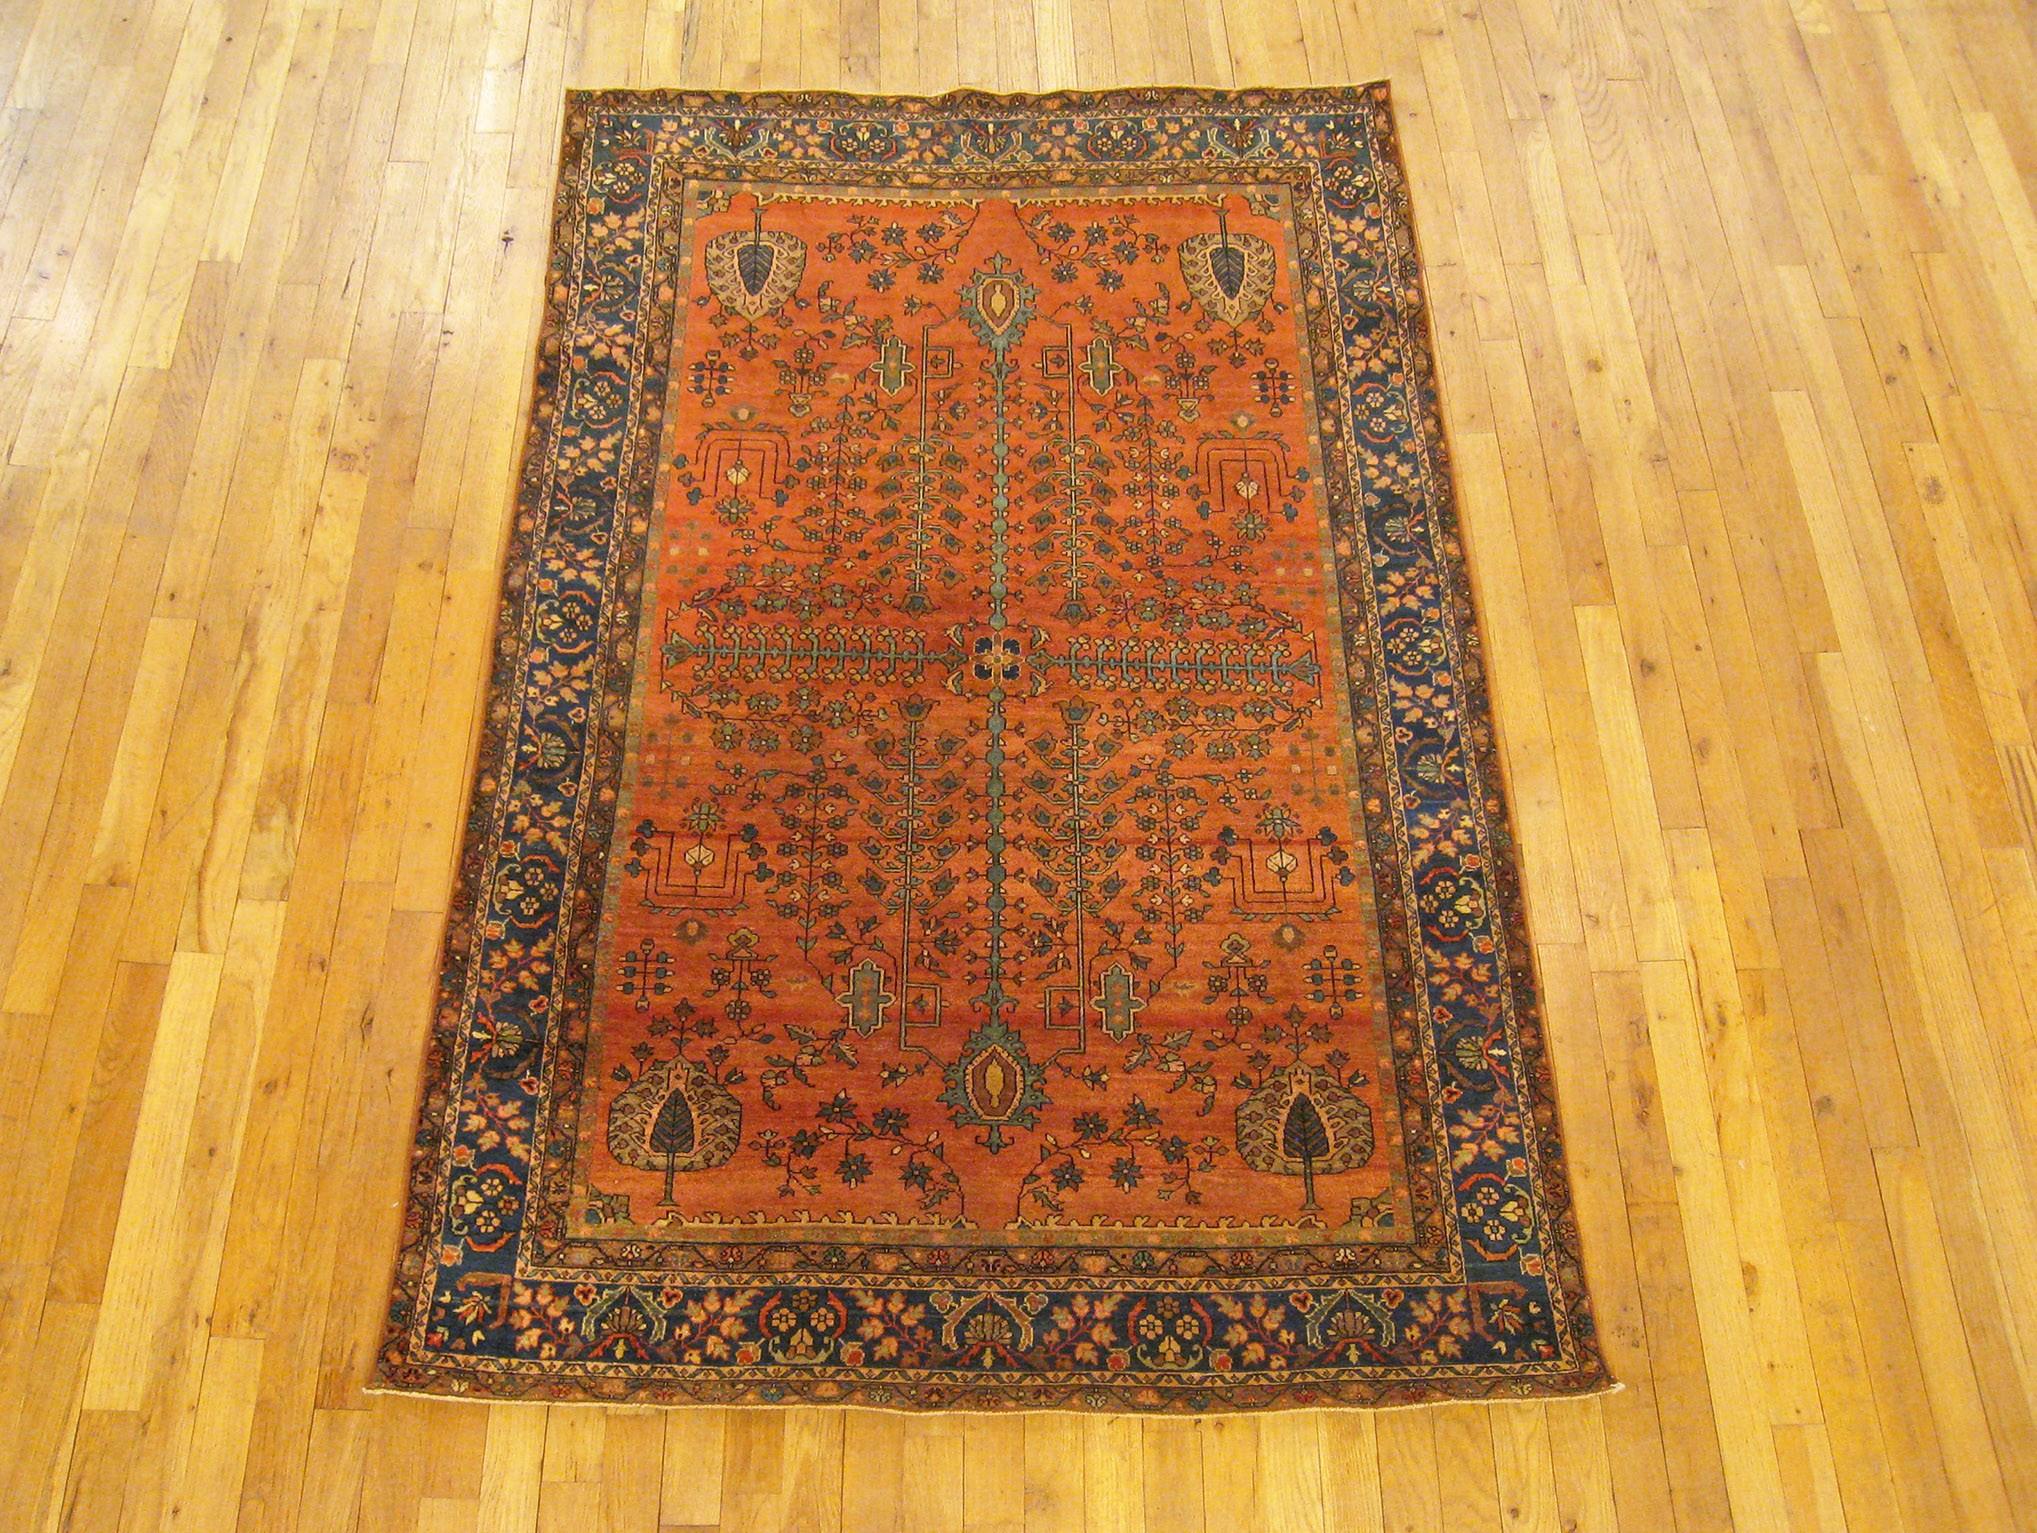 Antique Ferahan Sarouk Oriental Rug, circa 1900, Small size

An antique Ferahan Sarouk oriental rug, size 6'3